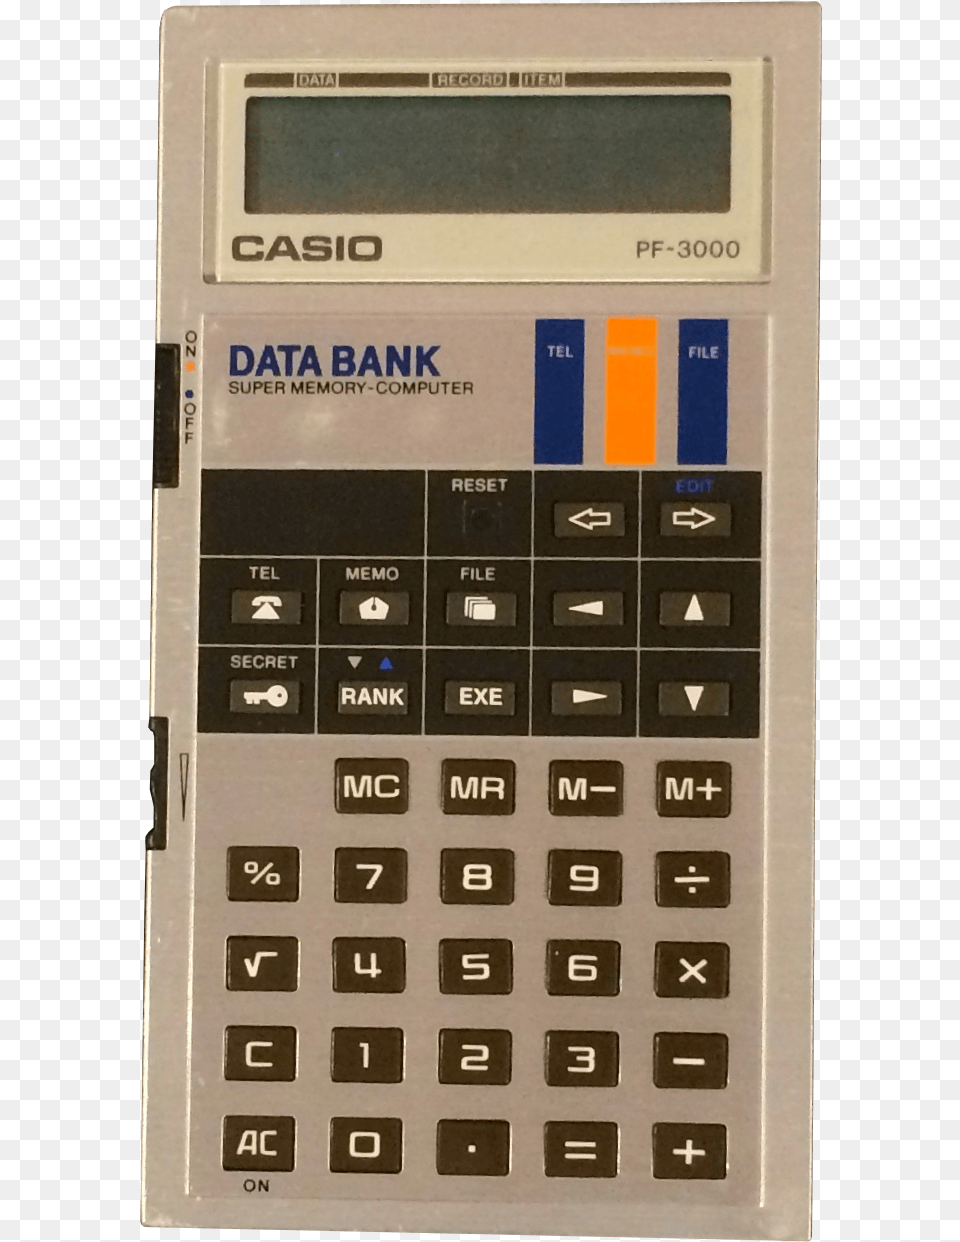 Casio Pf 3000 Calculator Casio Pf, Electronics, Mobile Phone, Phone Png Image